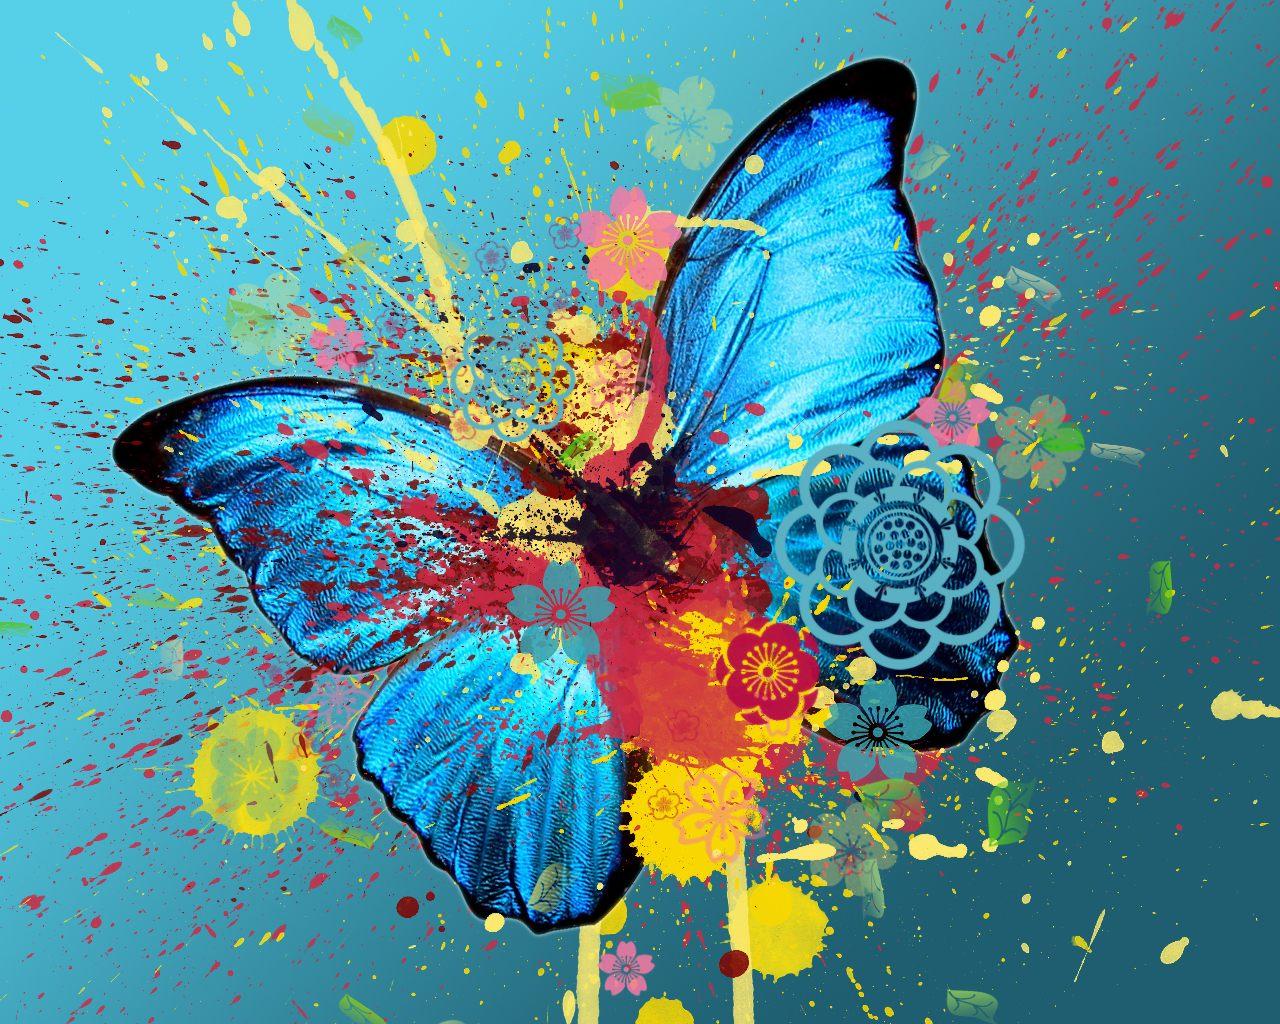 Wallpaper de borboletas - Fotos e imagens